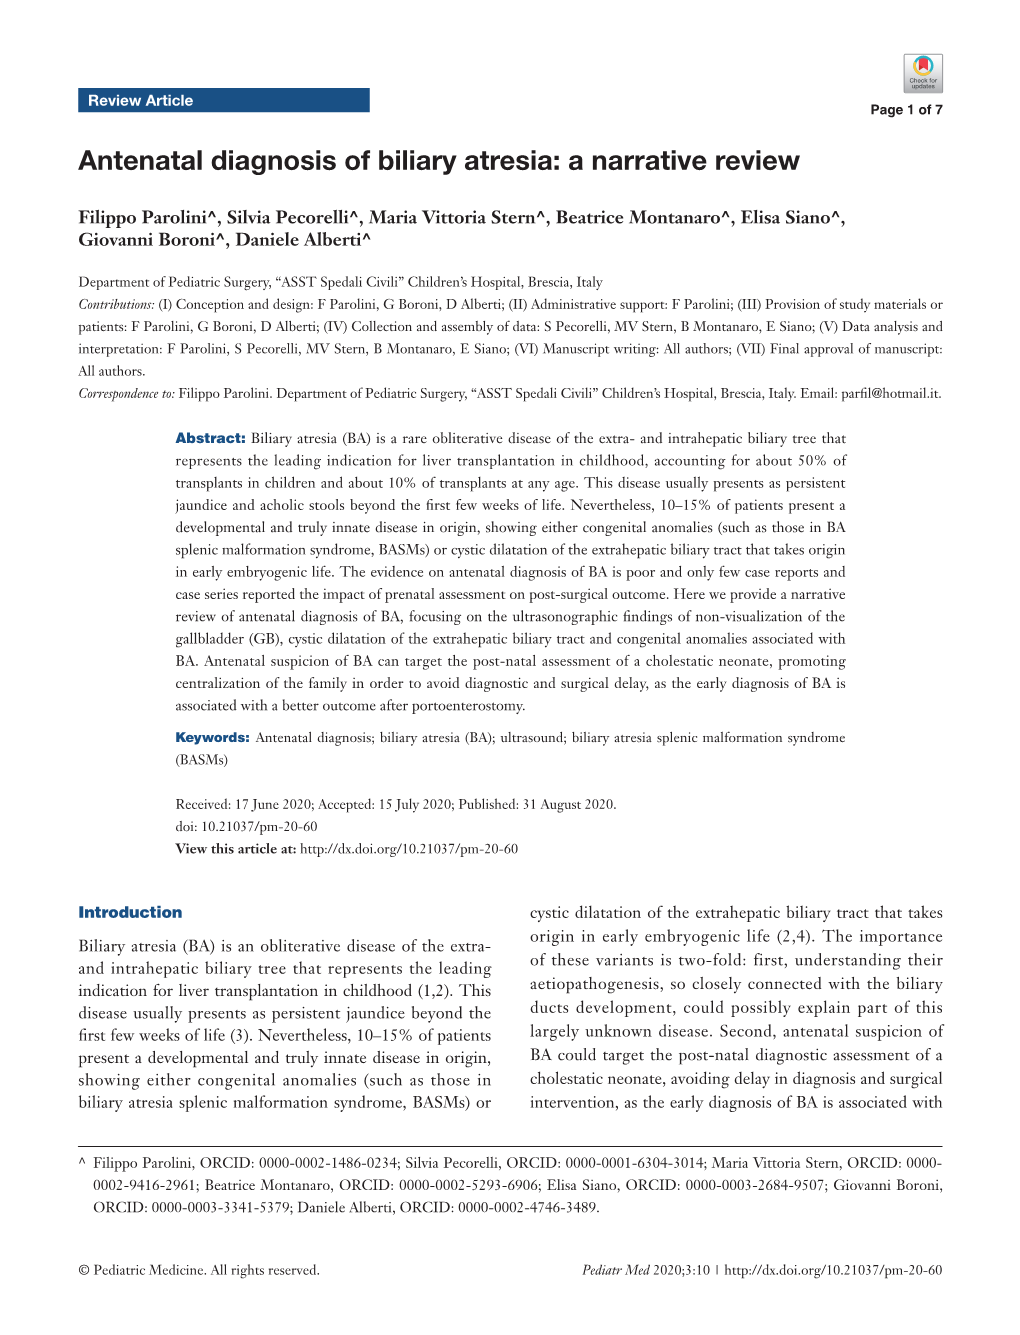 Antenatal Diagnosis of Biliary Atresia: a Narrative Review